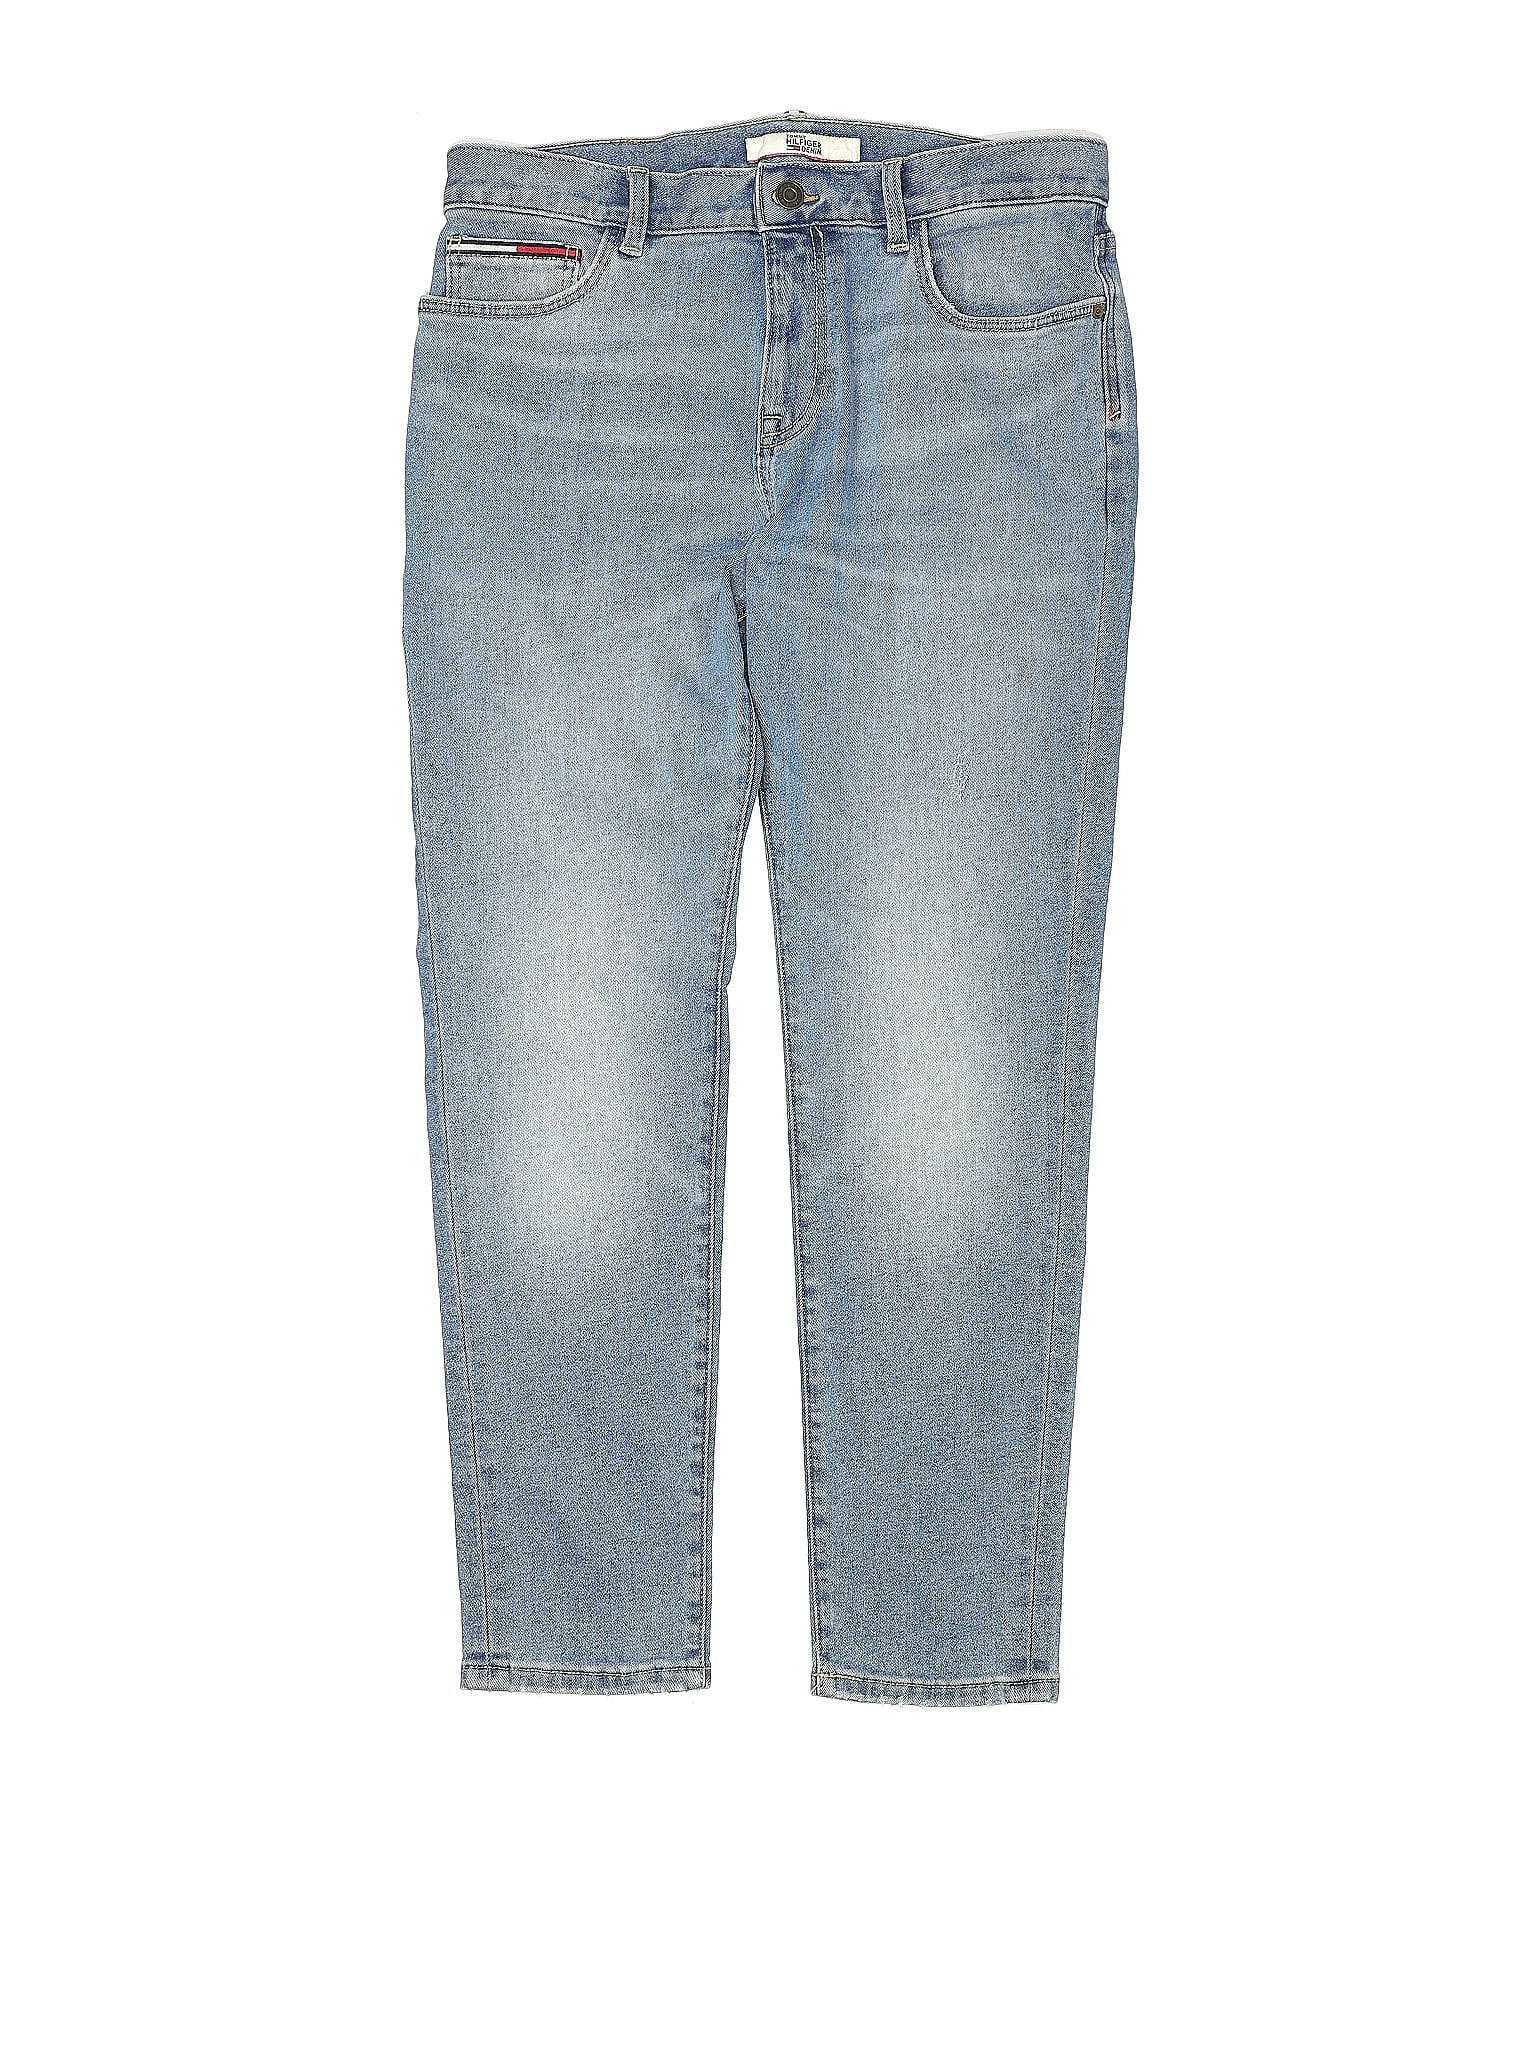 Jeans waist size - 33